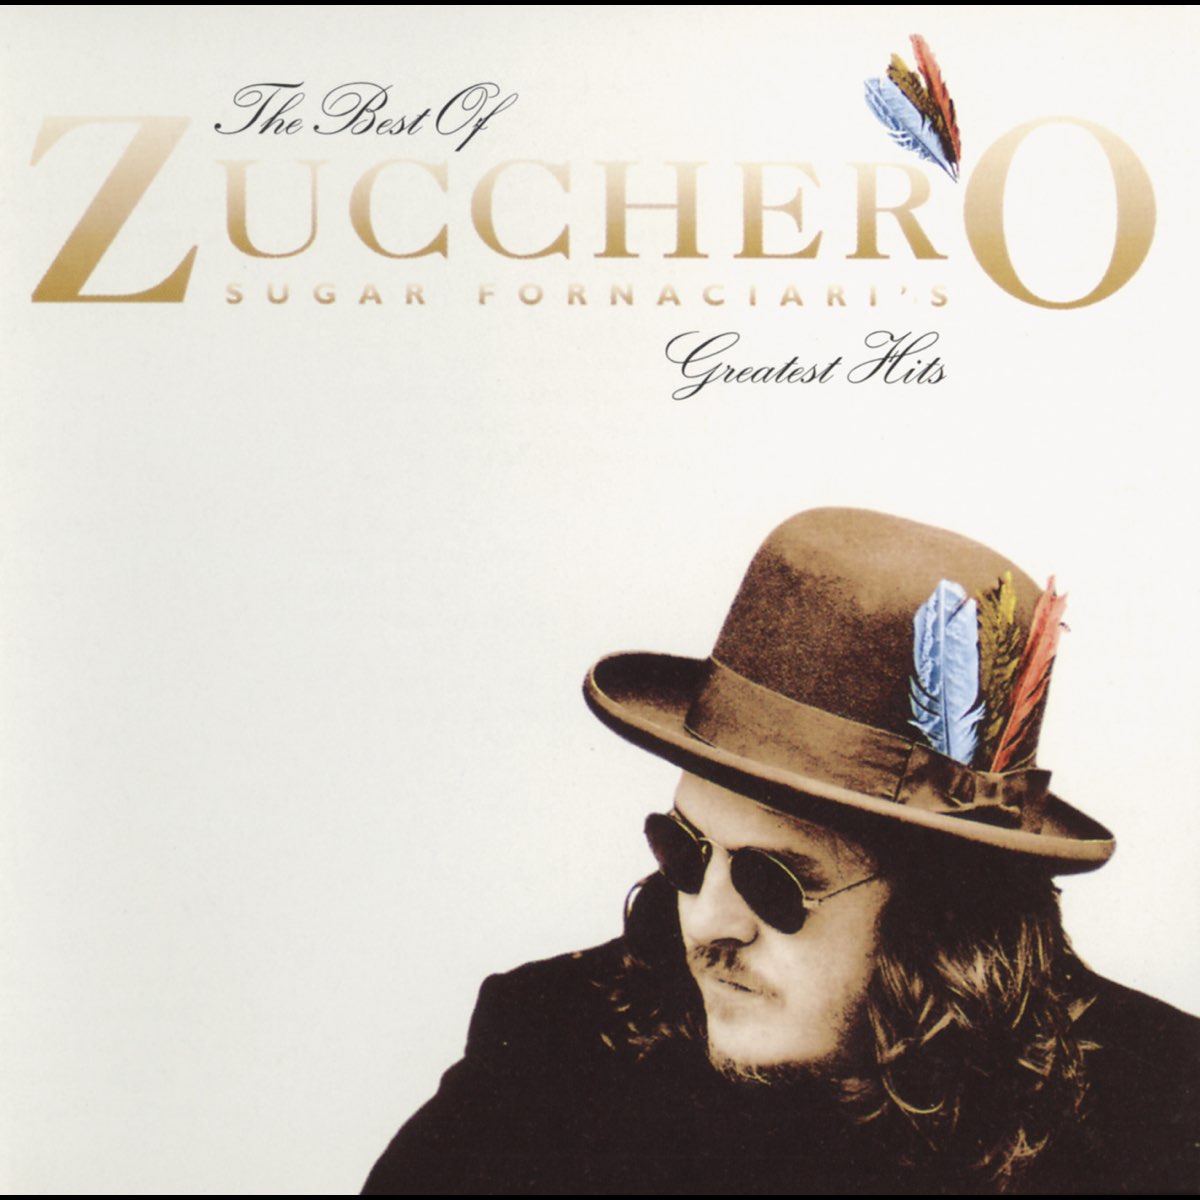 The Best of Zucchero - Sugar Fornaciari's Greatest Hits by Zucchero on  Apple Music